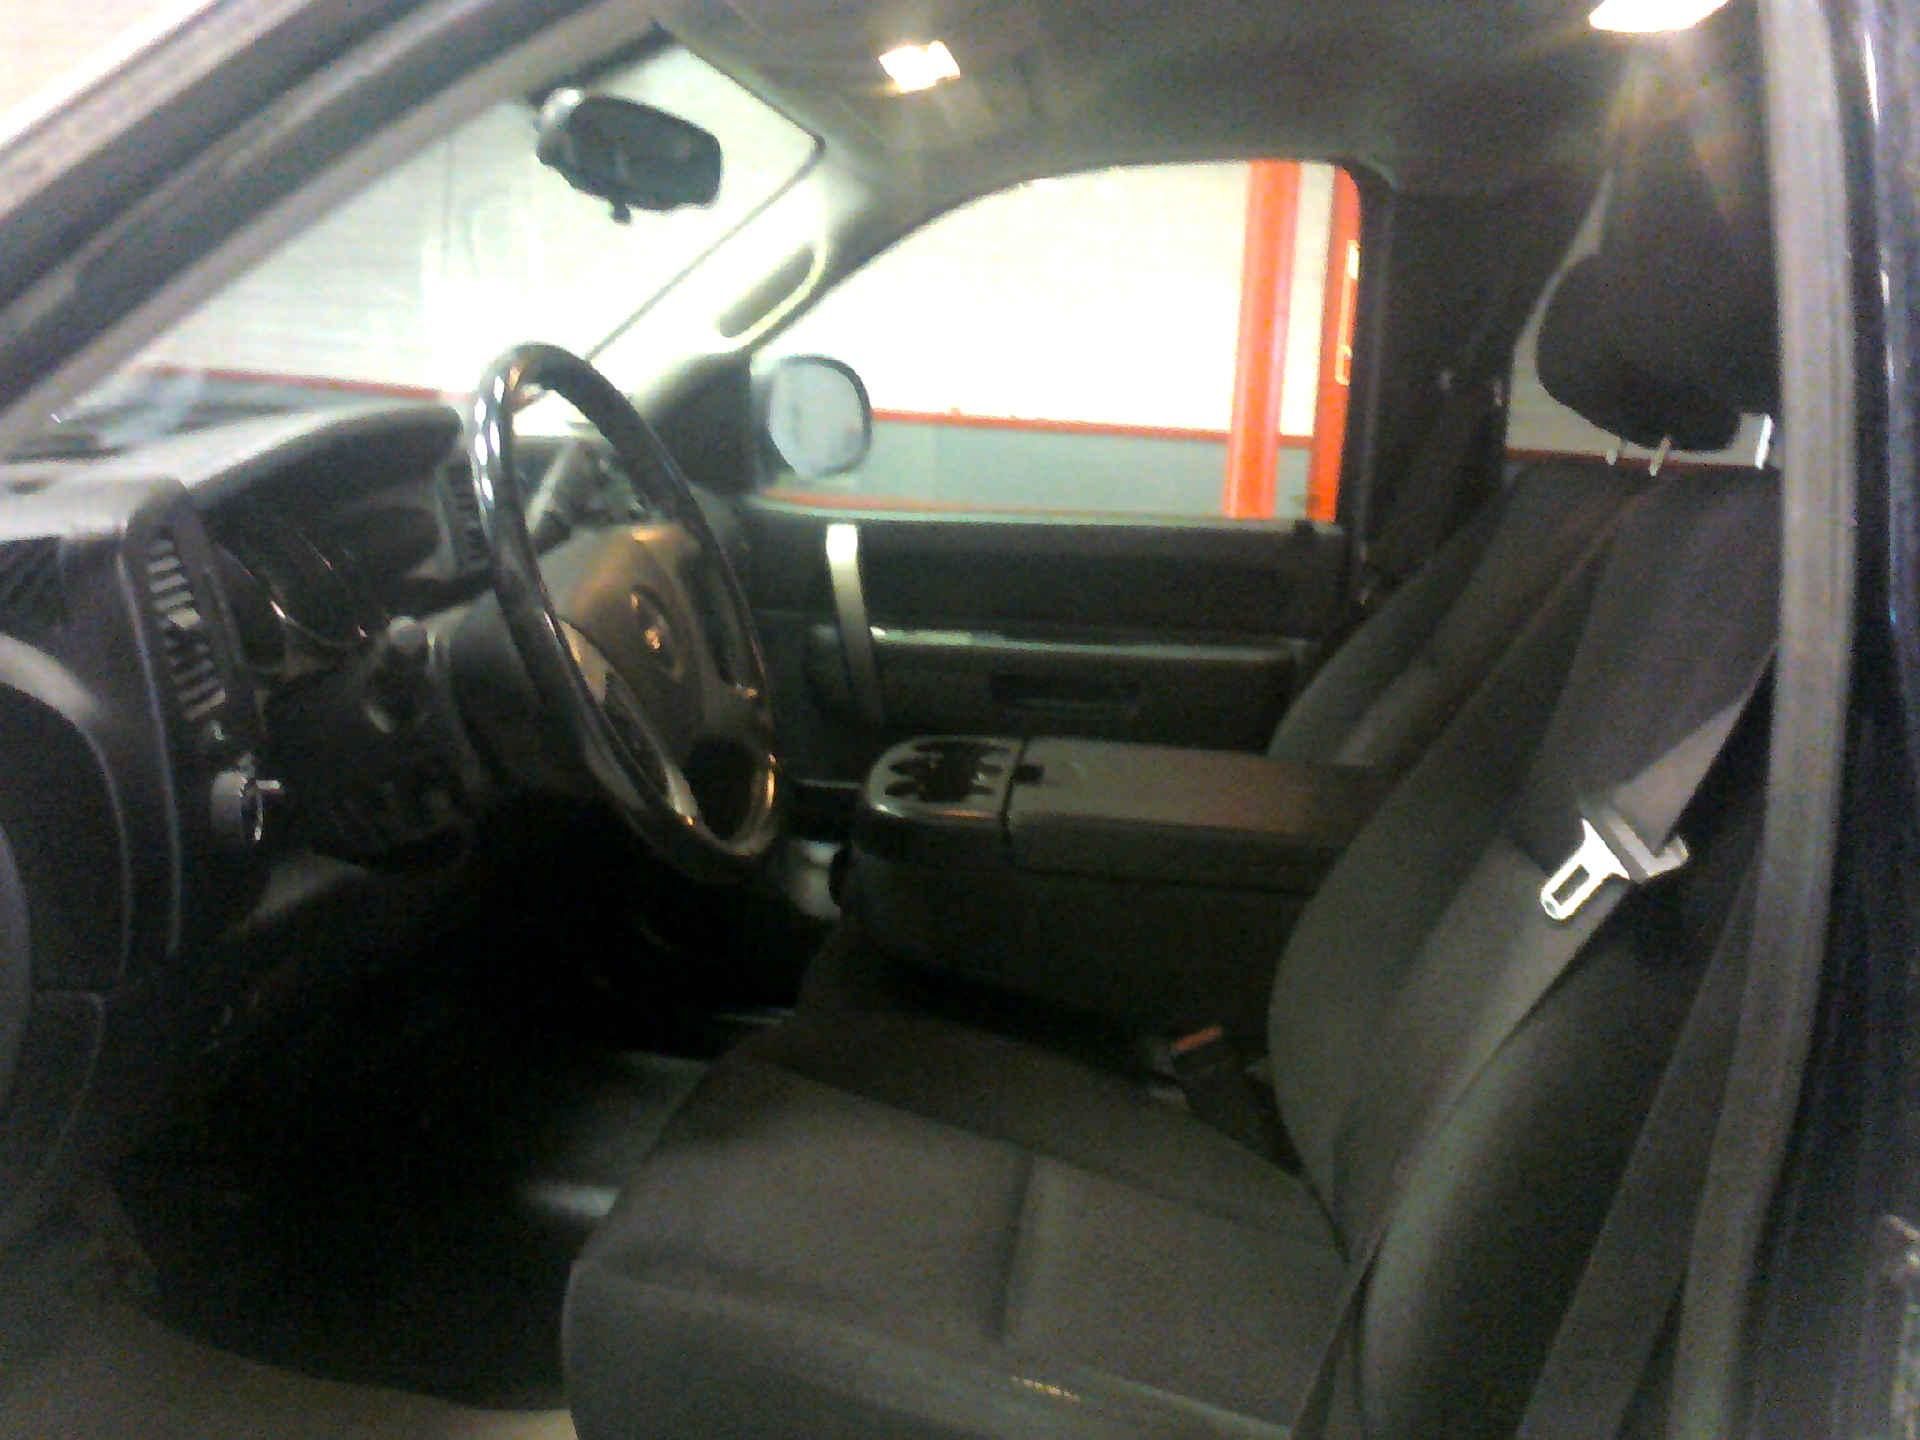 2012 GMC SIERRA 2500HD SLE QUAD CAB 4WD 6.0L V8 OHV 16V FFV AUTOMATIC SN:1GT220CG7CZ236804 OPTIONS: - Image 5 of 9